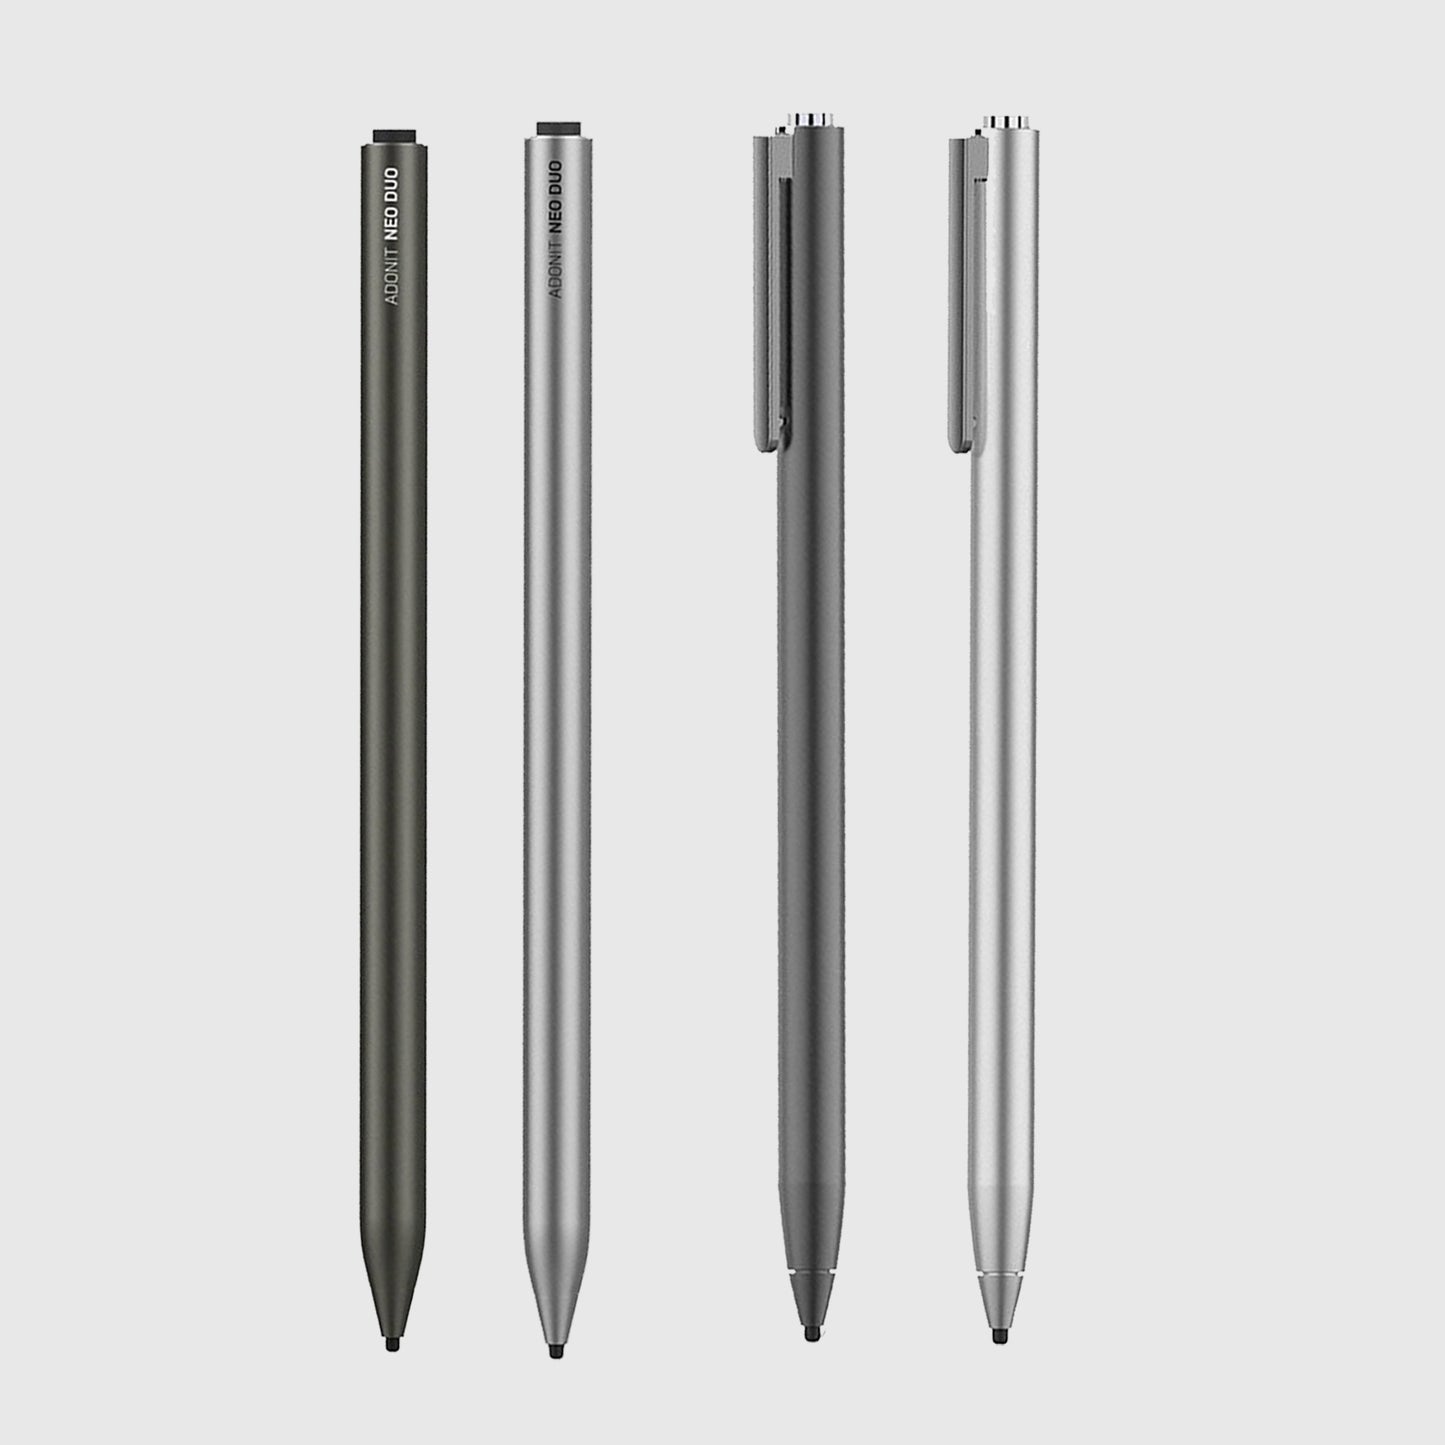 Adonit Dash 4 Stylus Pen - Graphite Black